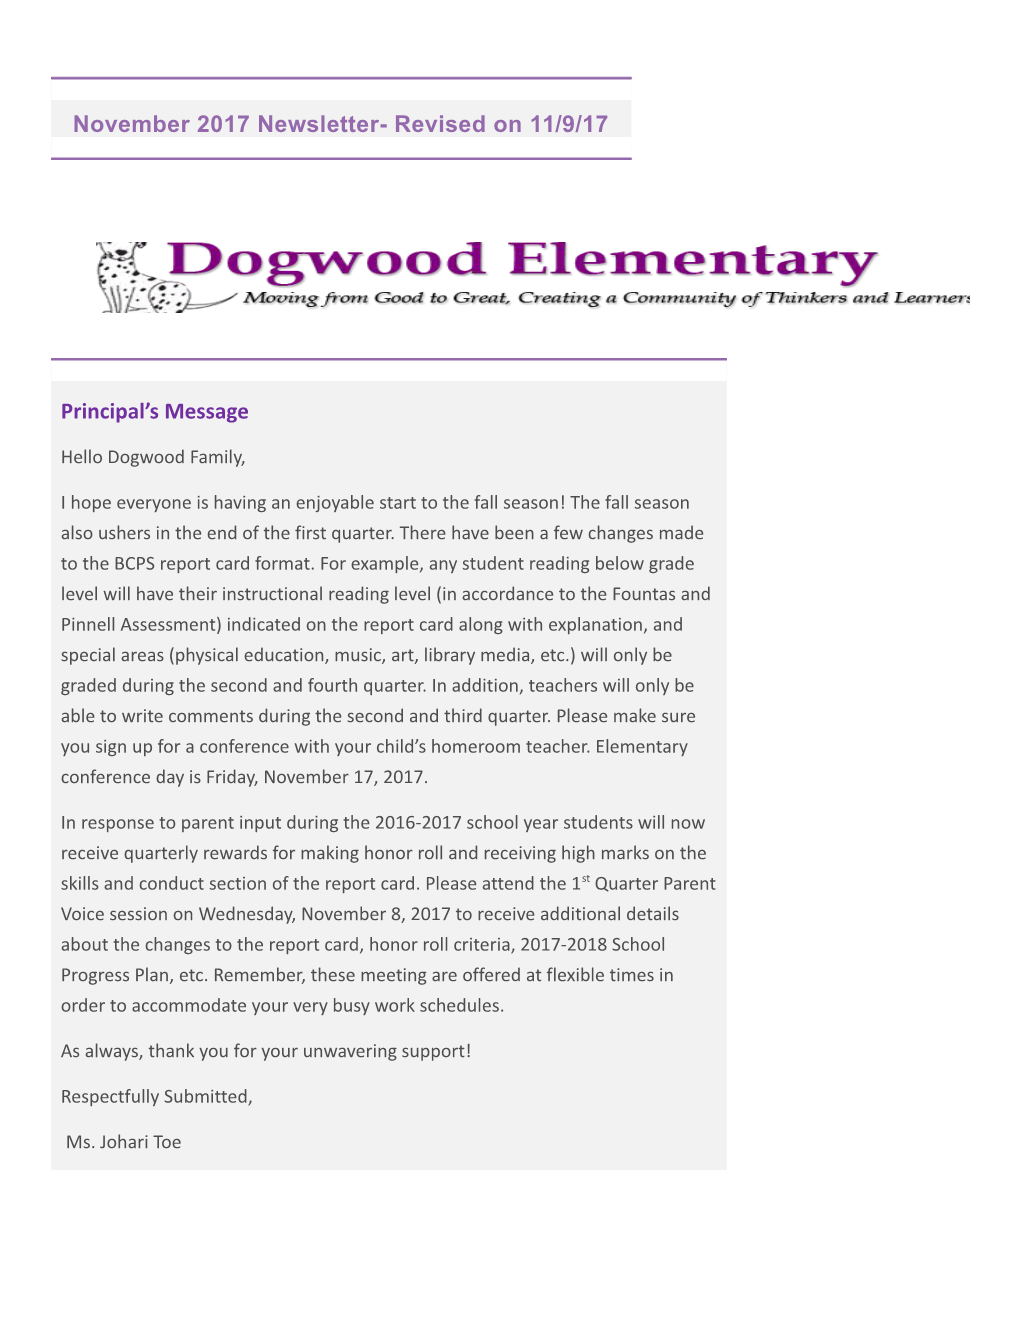 Dogwood Elementary School